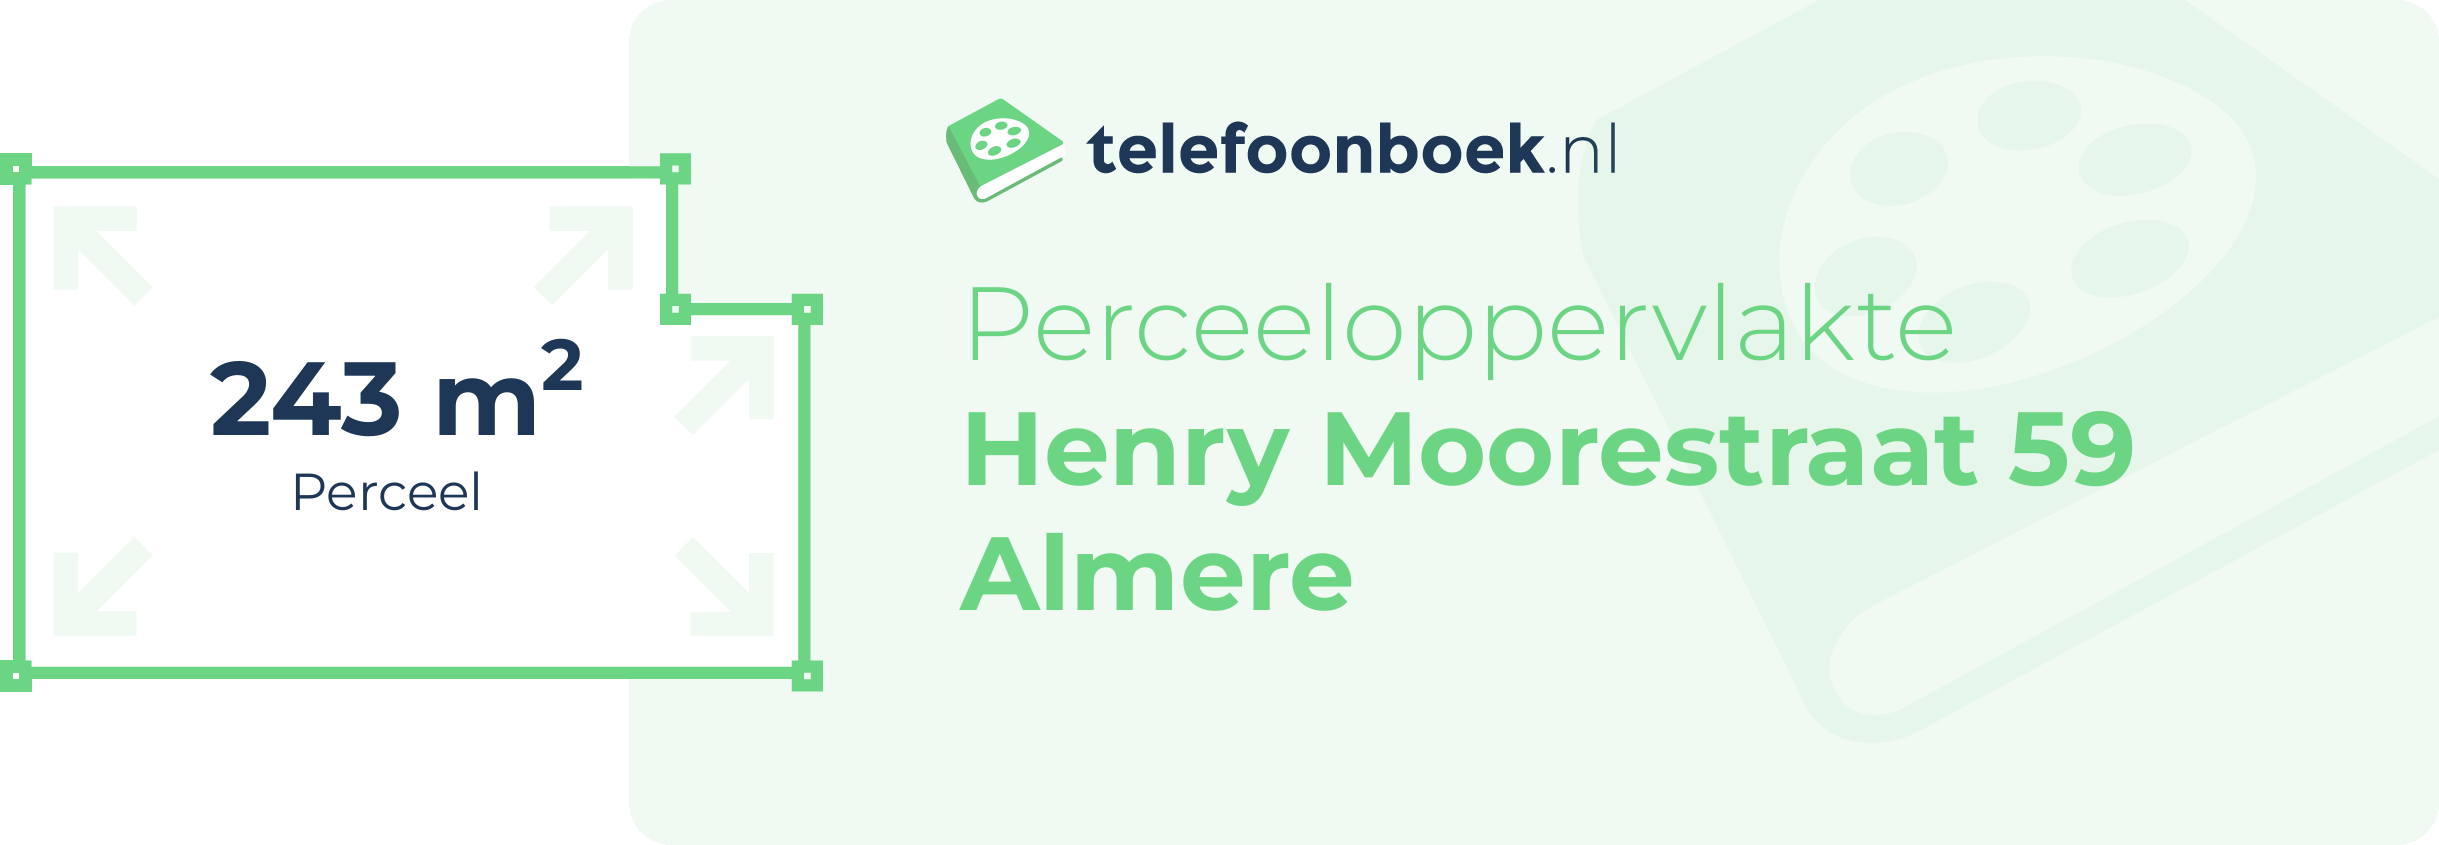 Perceeloppervlakte Henry Moorestraat 59 Almere